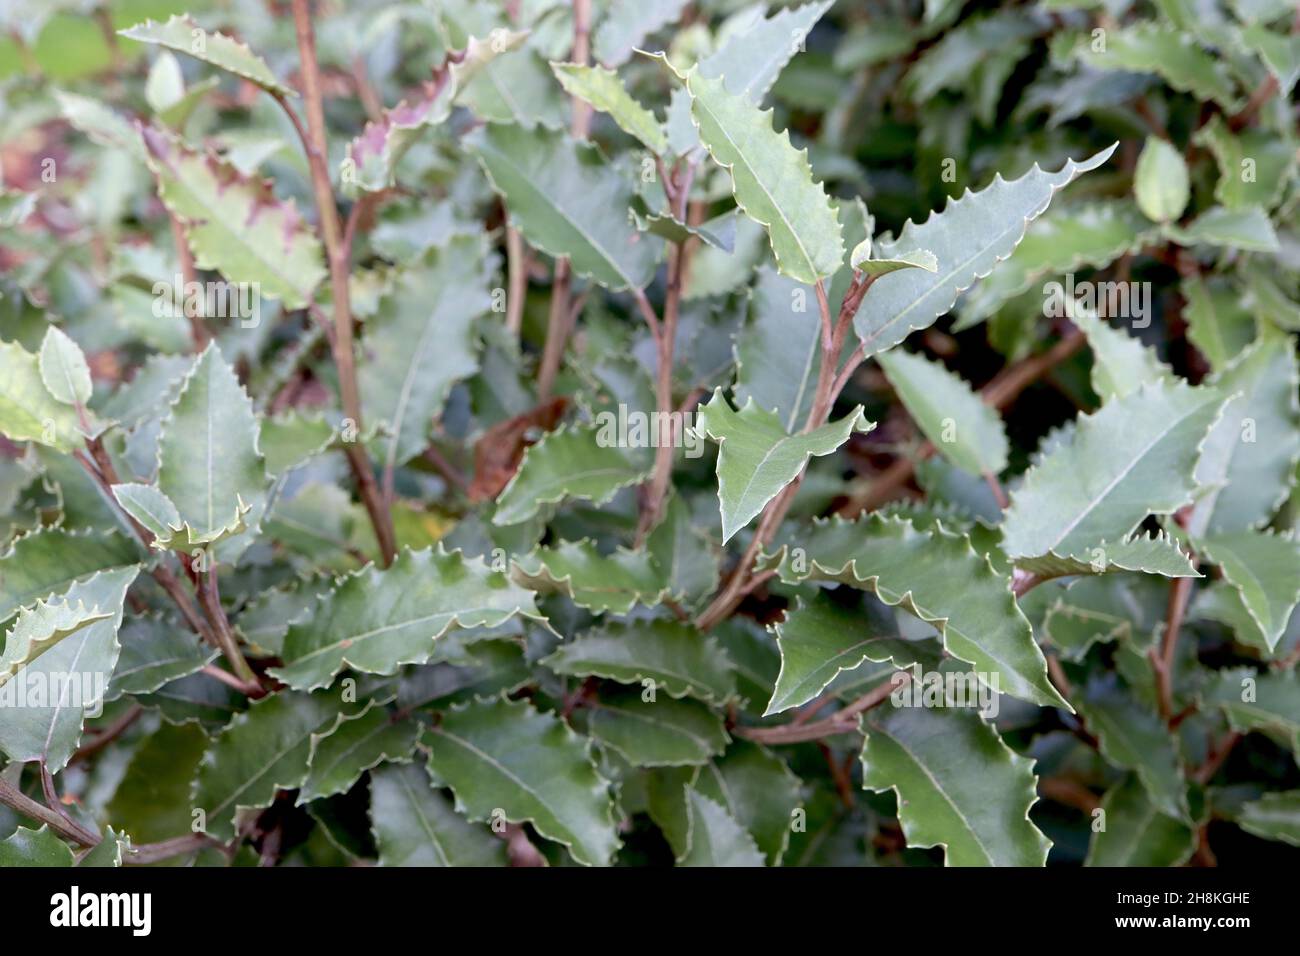 Olearia macrodonta New Zealand holly – ovate incurled dark green leaves with serrated margins,  November, England, UK Stock Photo